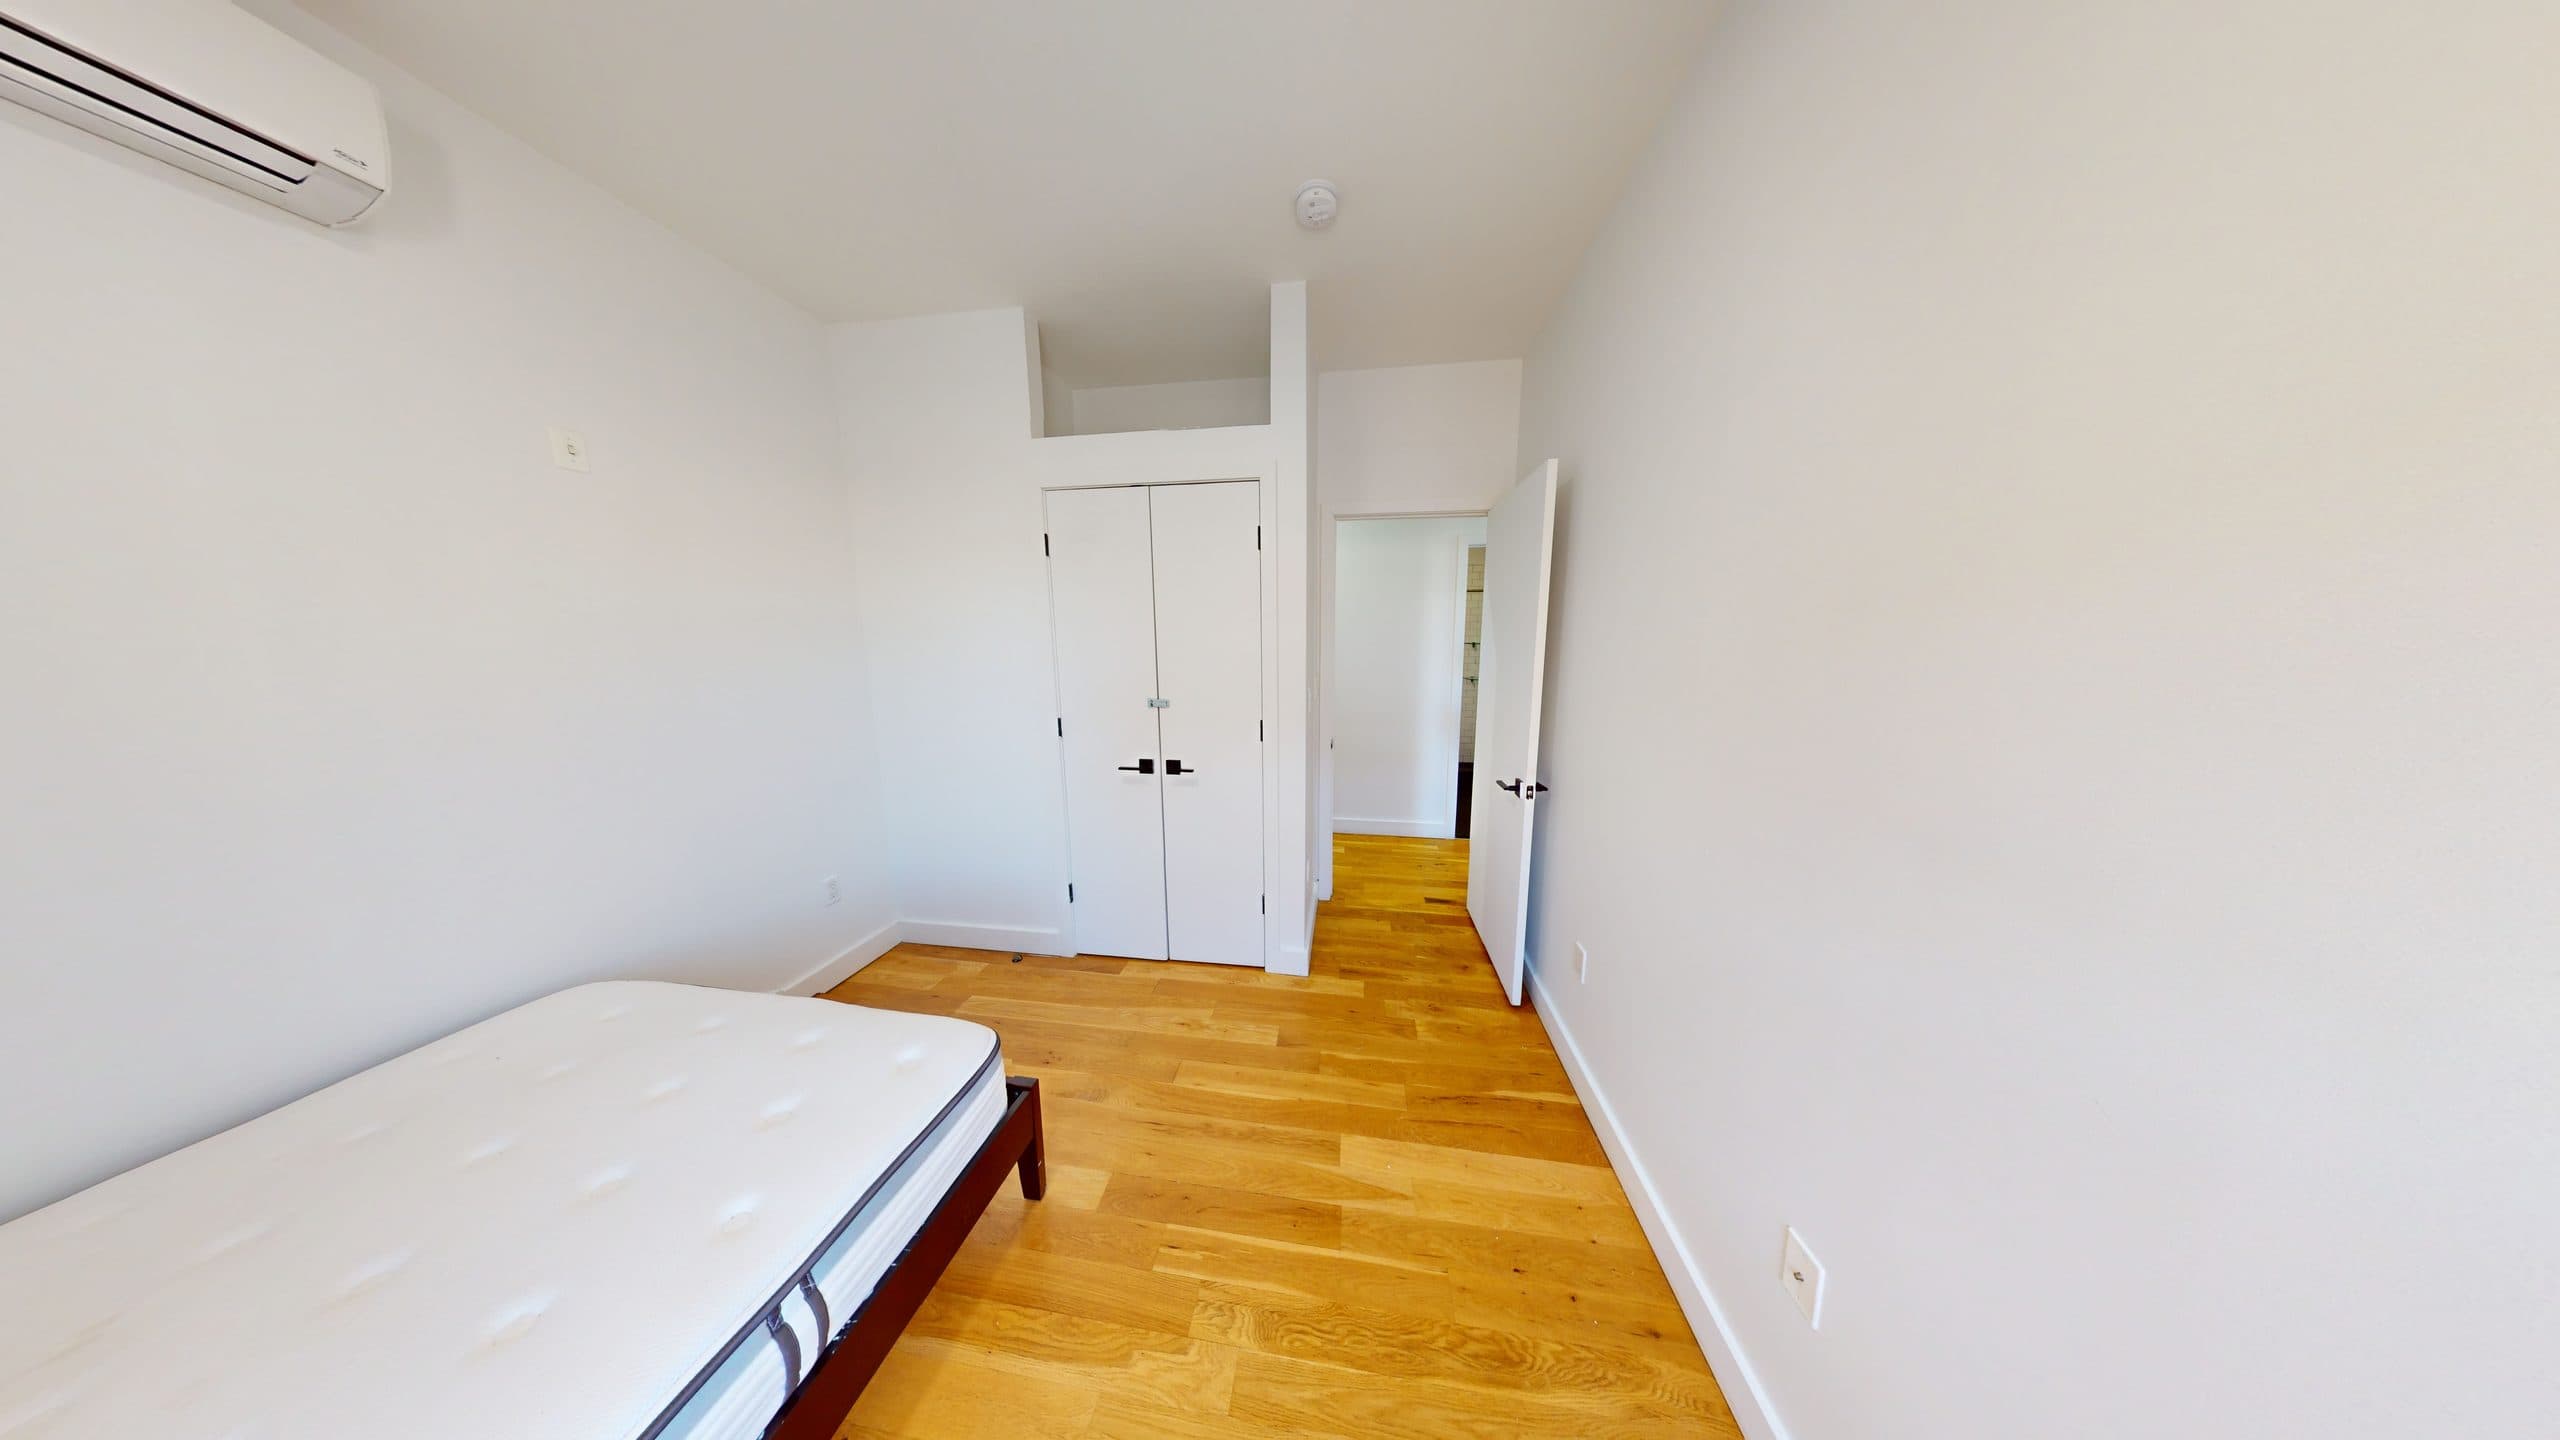 Photo 2 of #4228: Full Bedroom B at June Homes